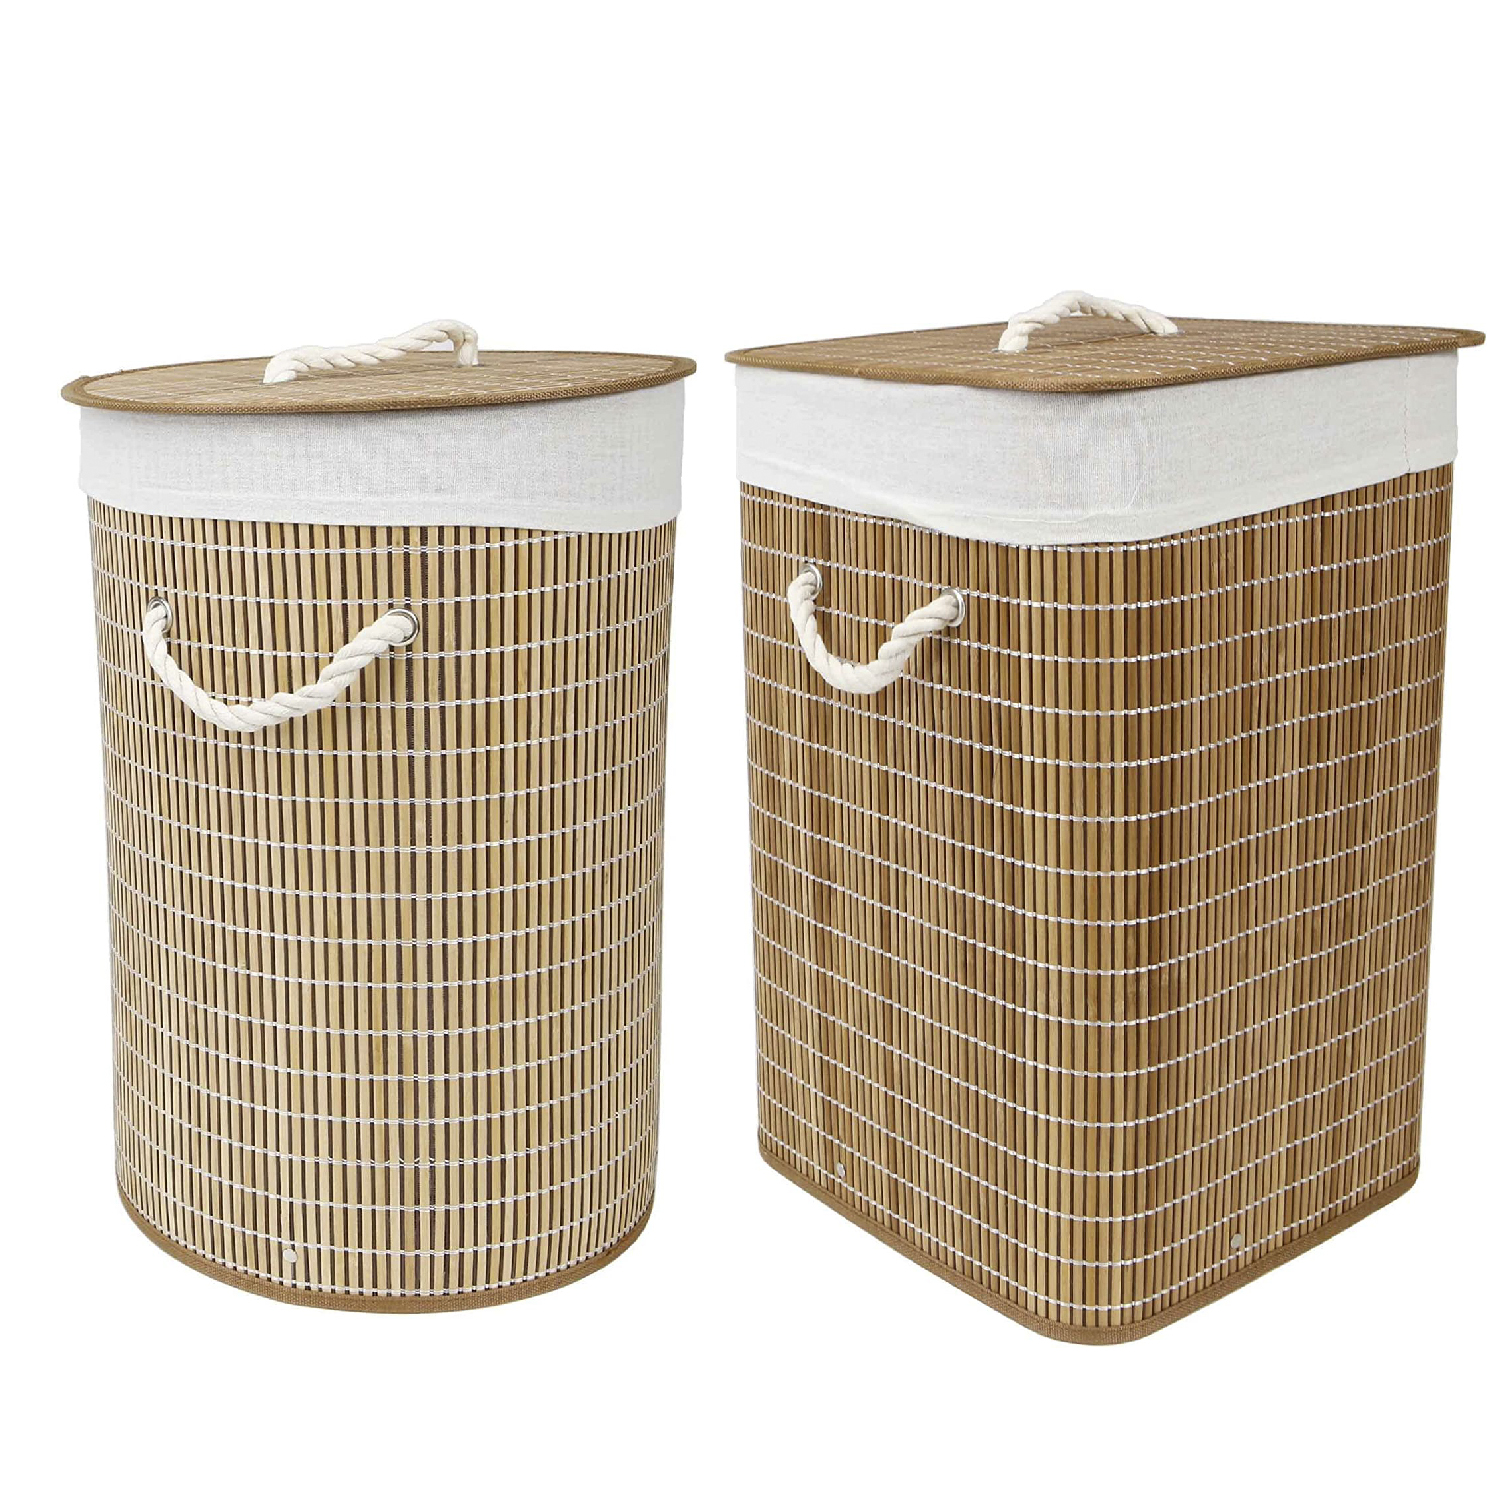 TIENDA EURASIA - Cesto ropa Sucia Fabricado en Bambu y Tela, 40 x 50 x 30  cm, 60 litros